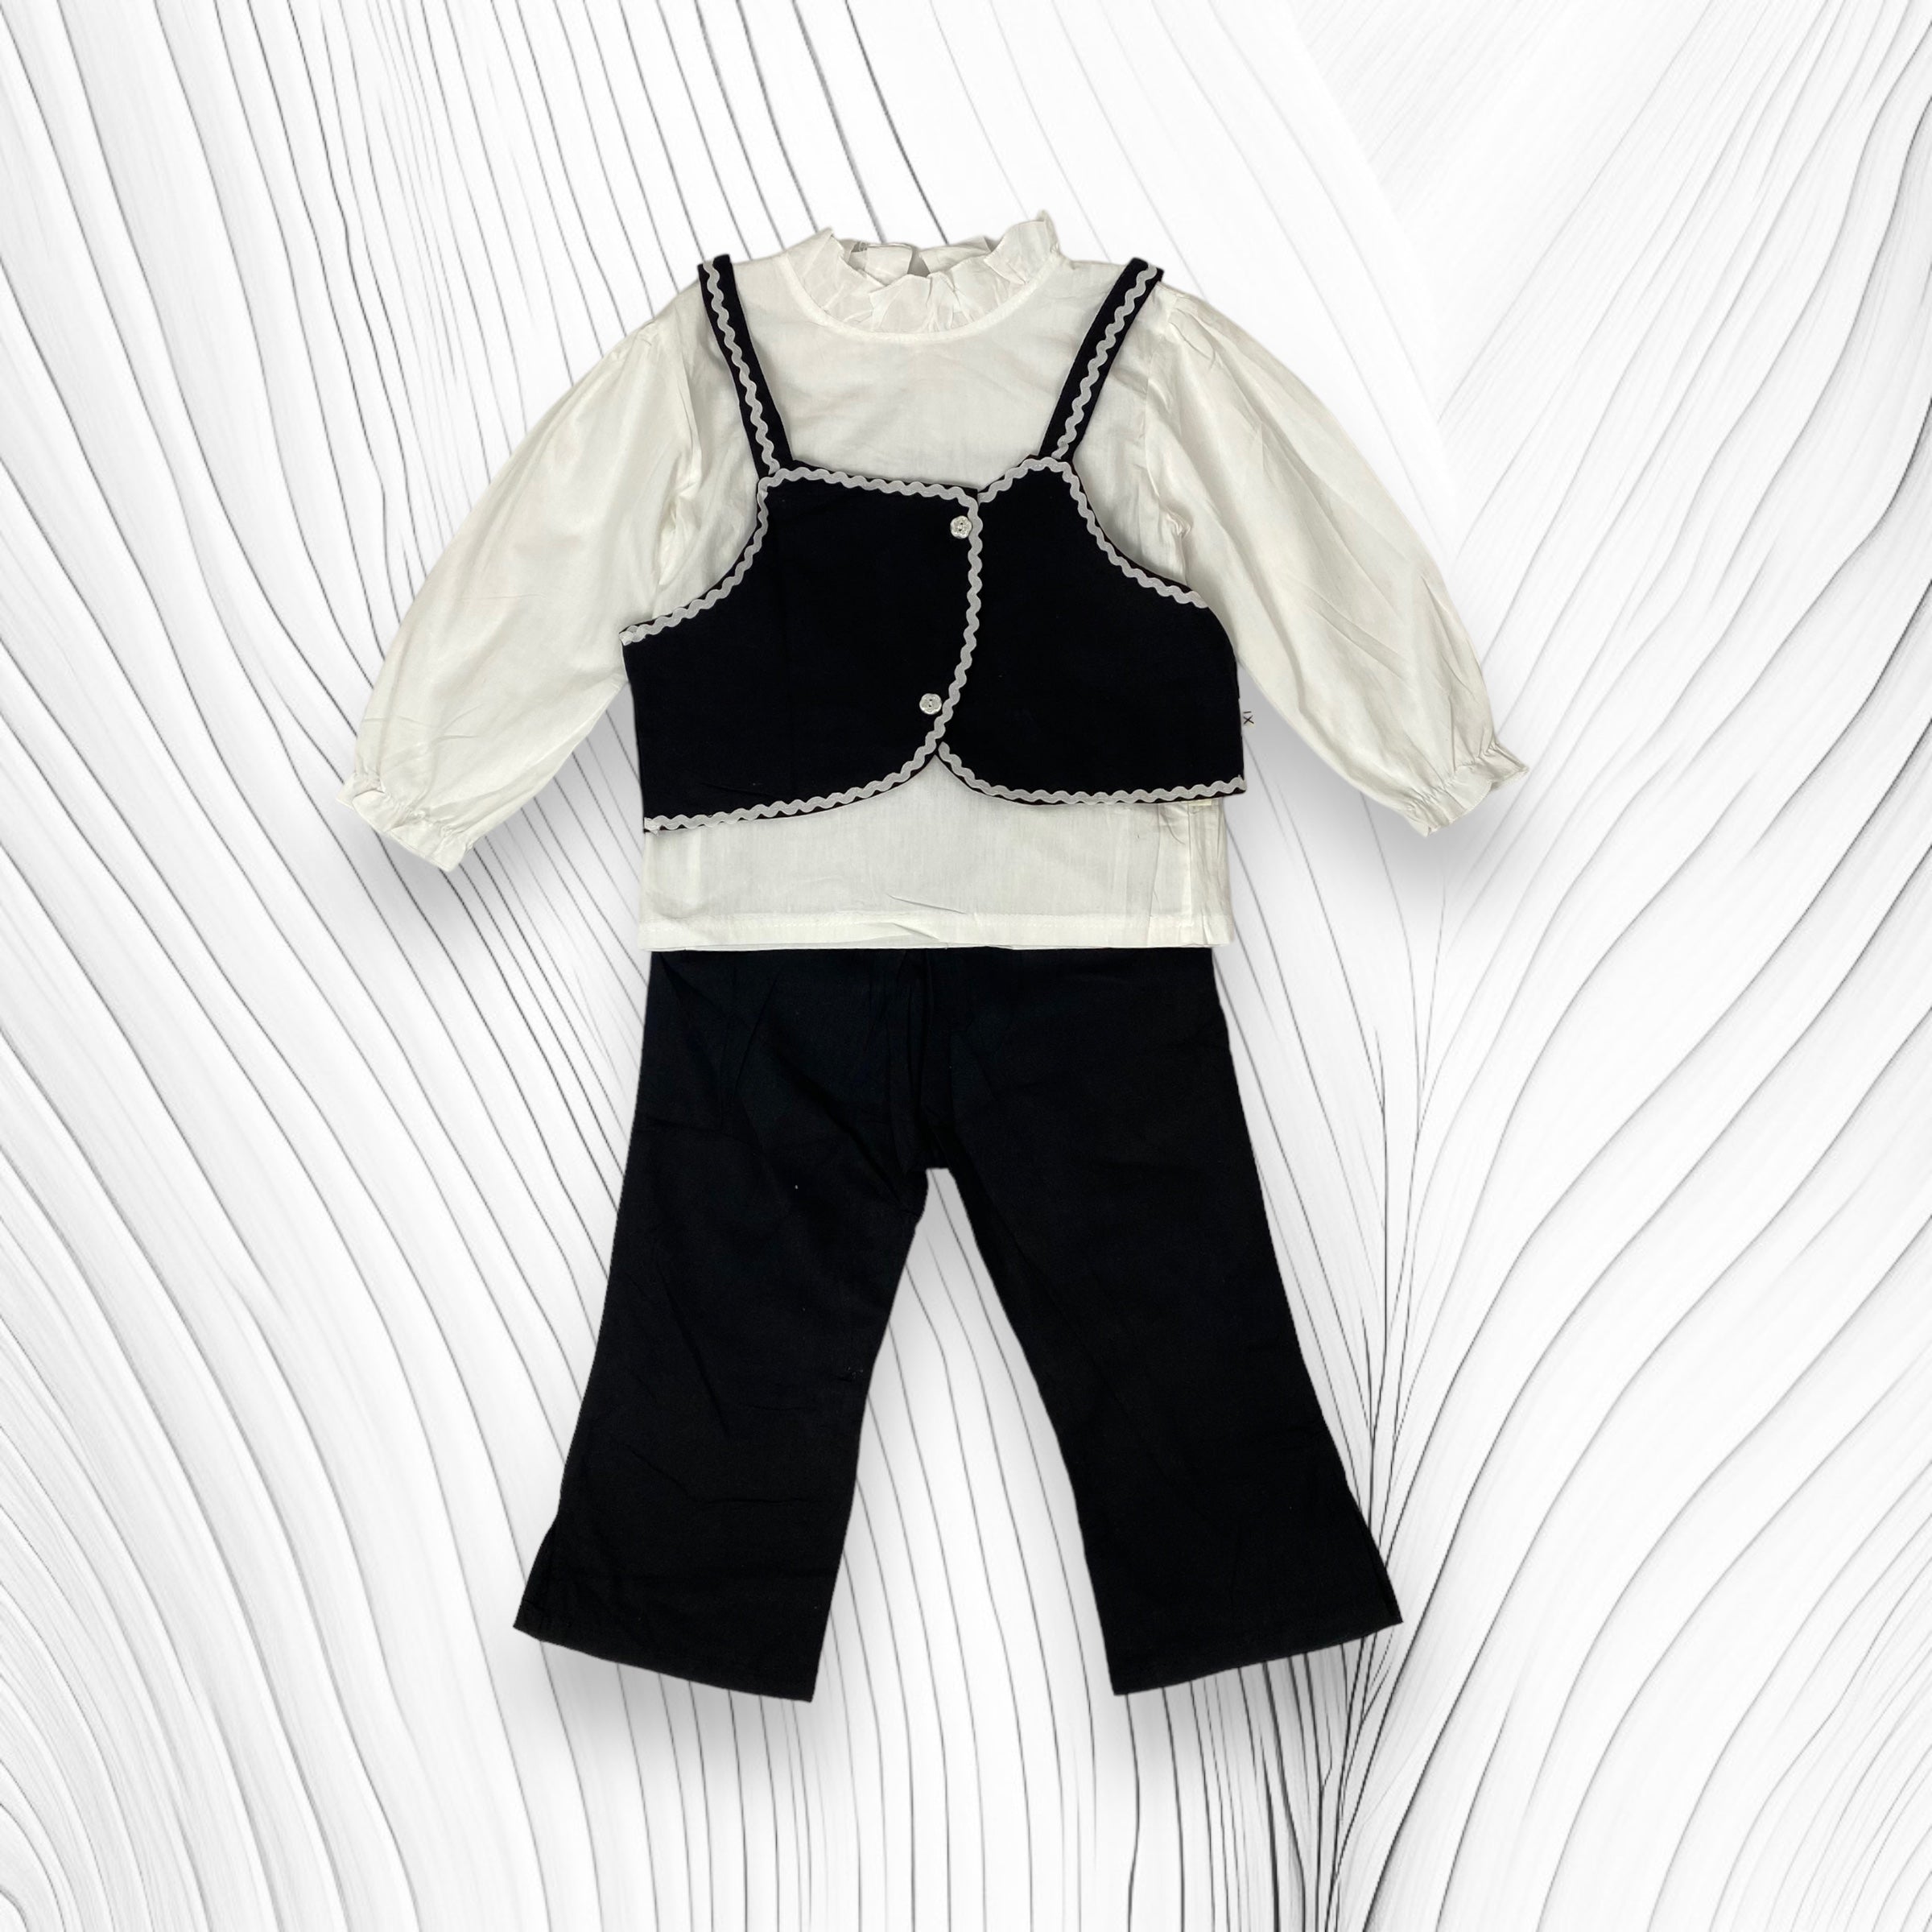 [340409-V1] - Baju Setelan 3 in 1 Blouse Rompi Fashion Import Anak Perempuan - Motif Side Serrations